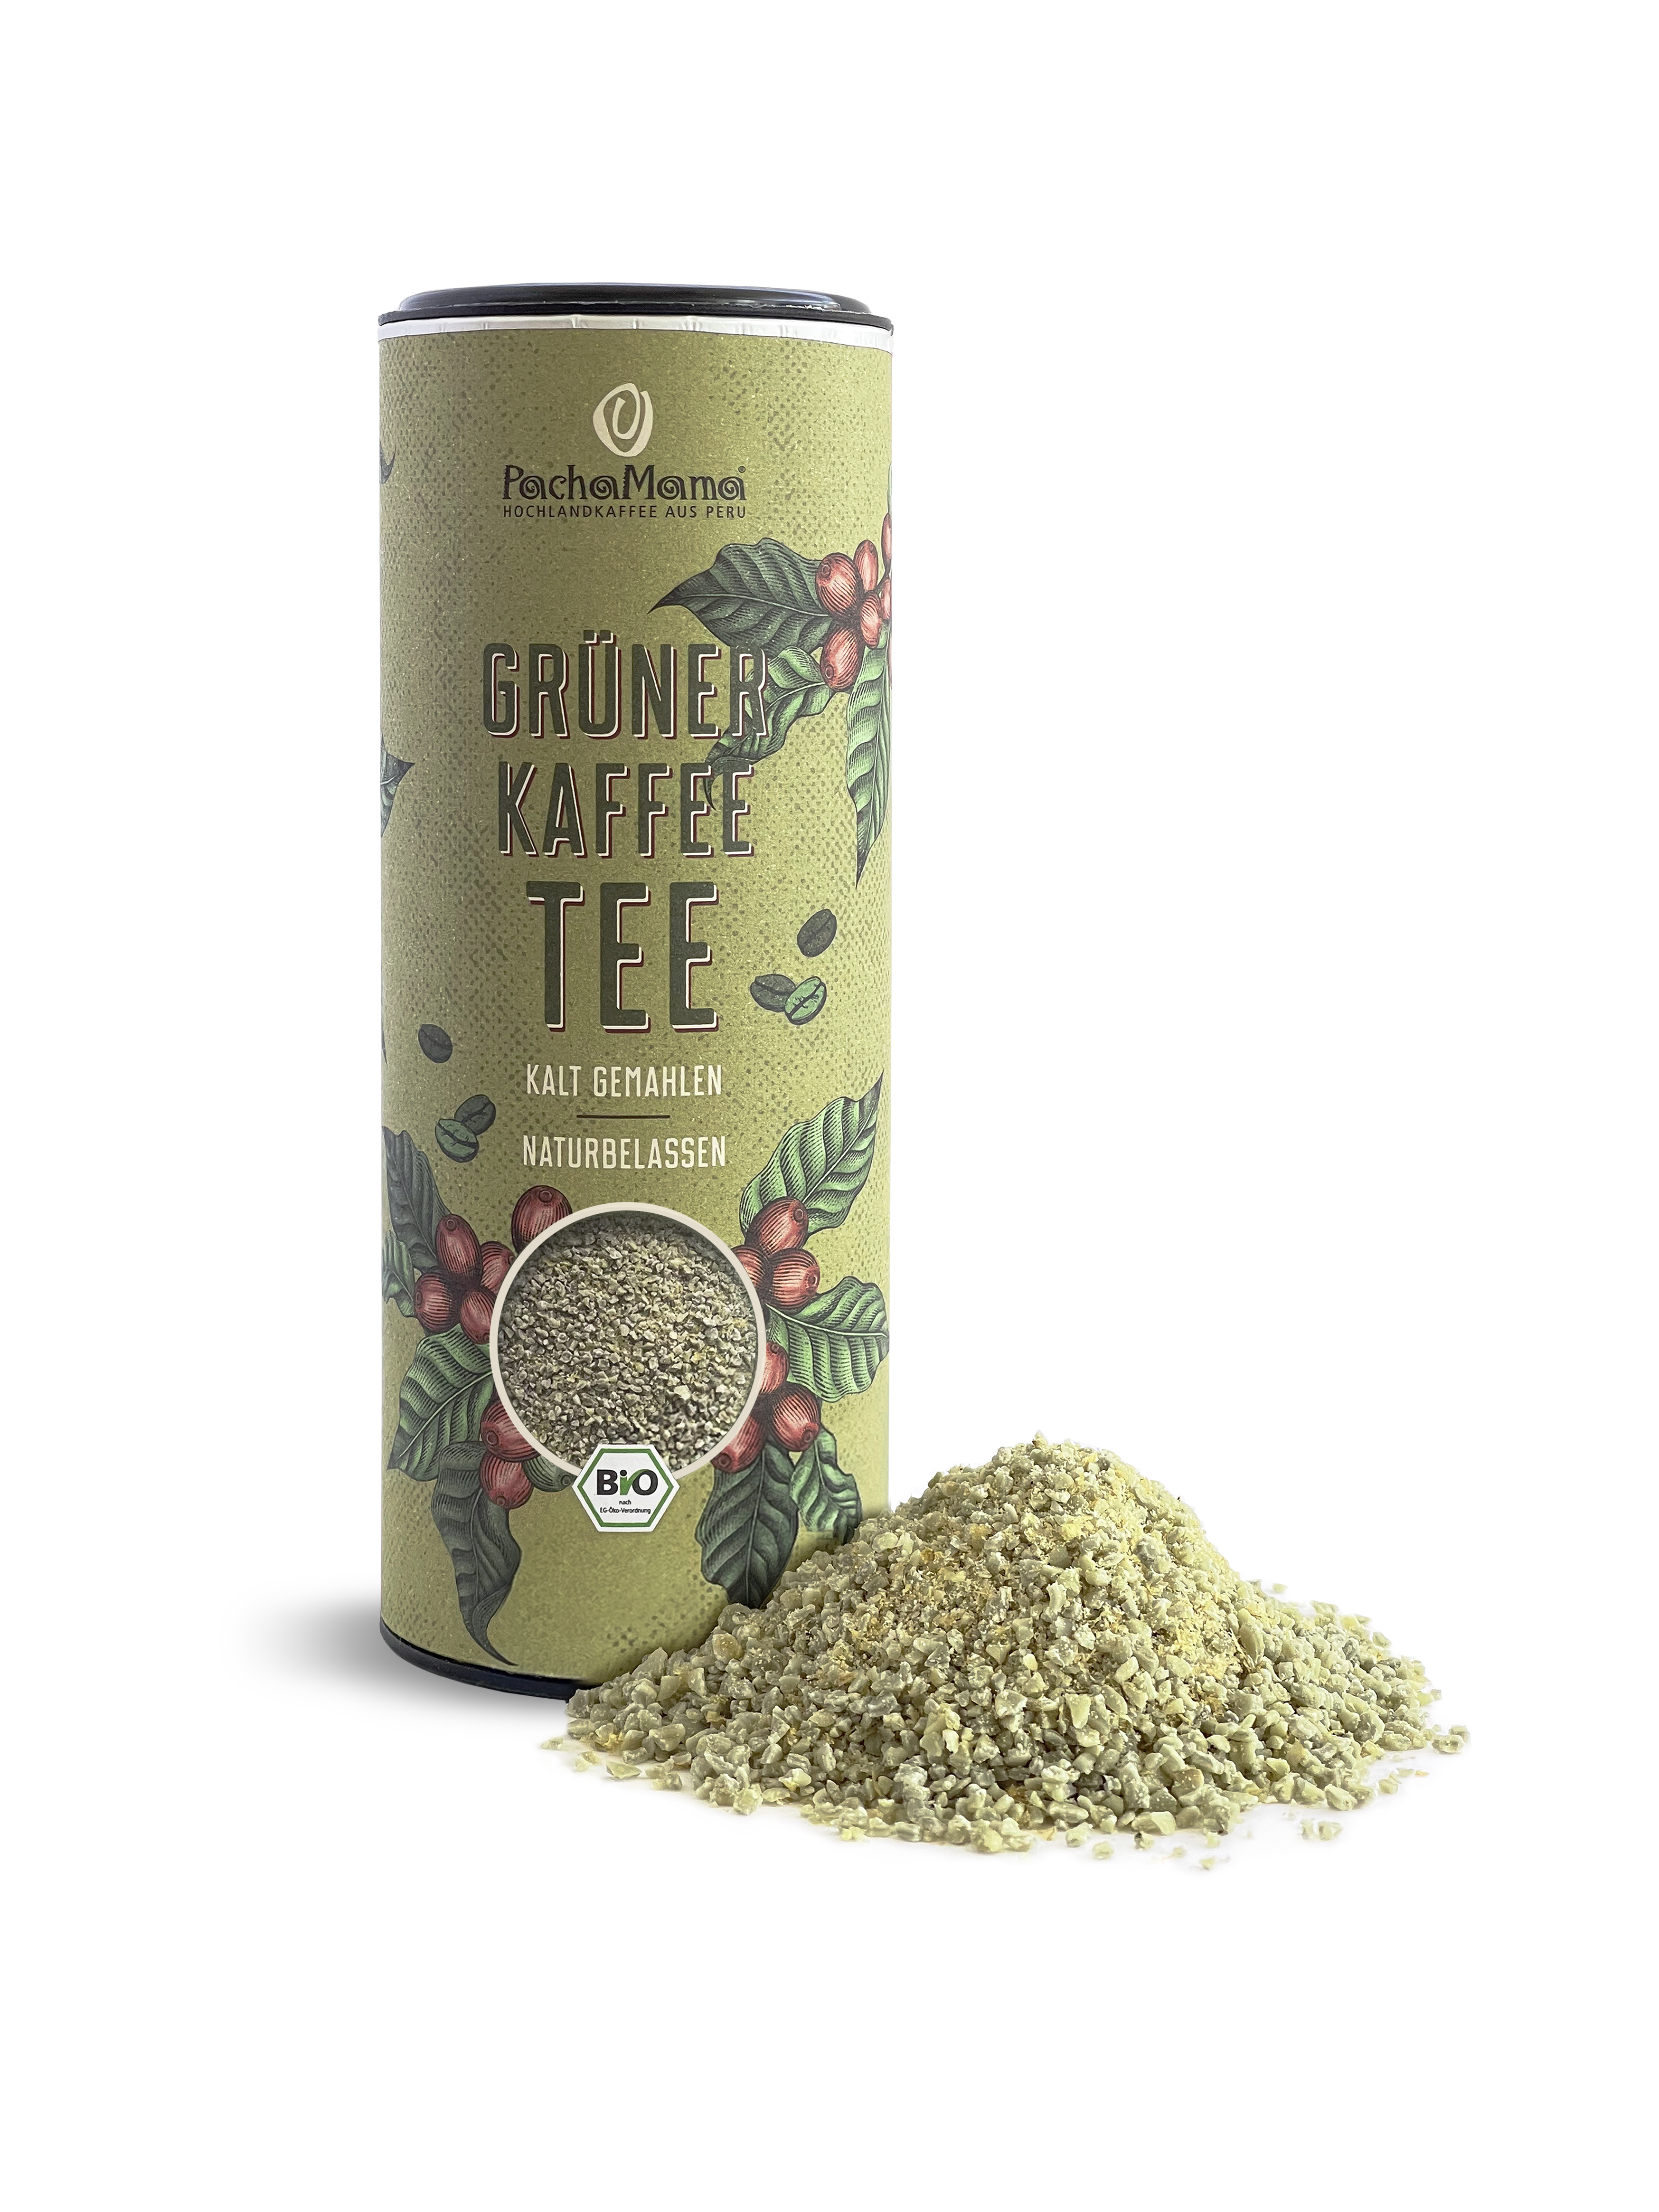 Grüner Kaffee-Tee - kalt gemahlen- (150g Dose)